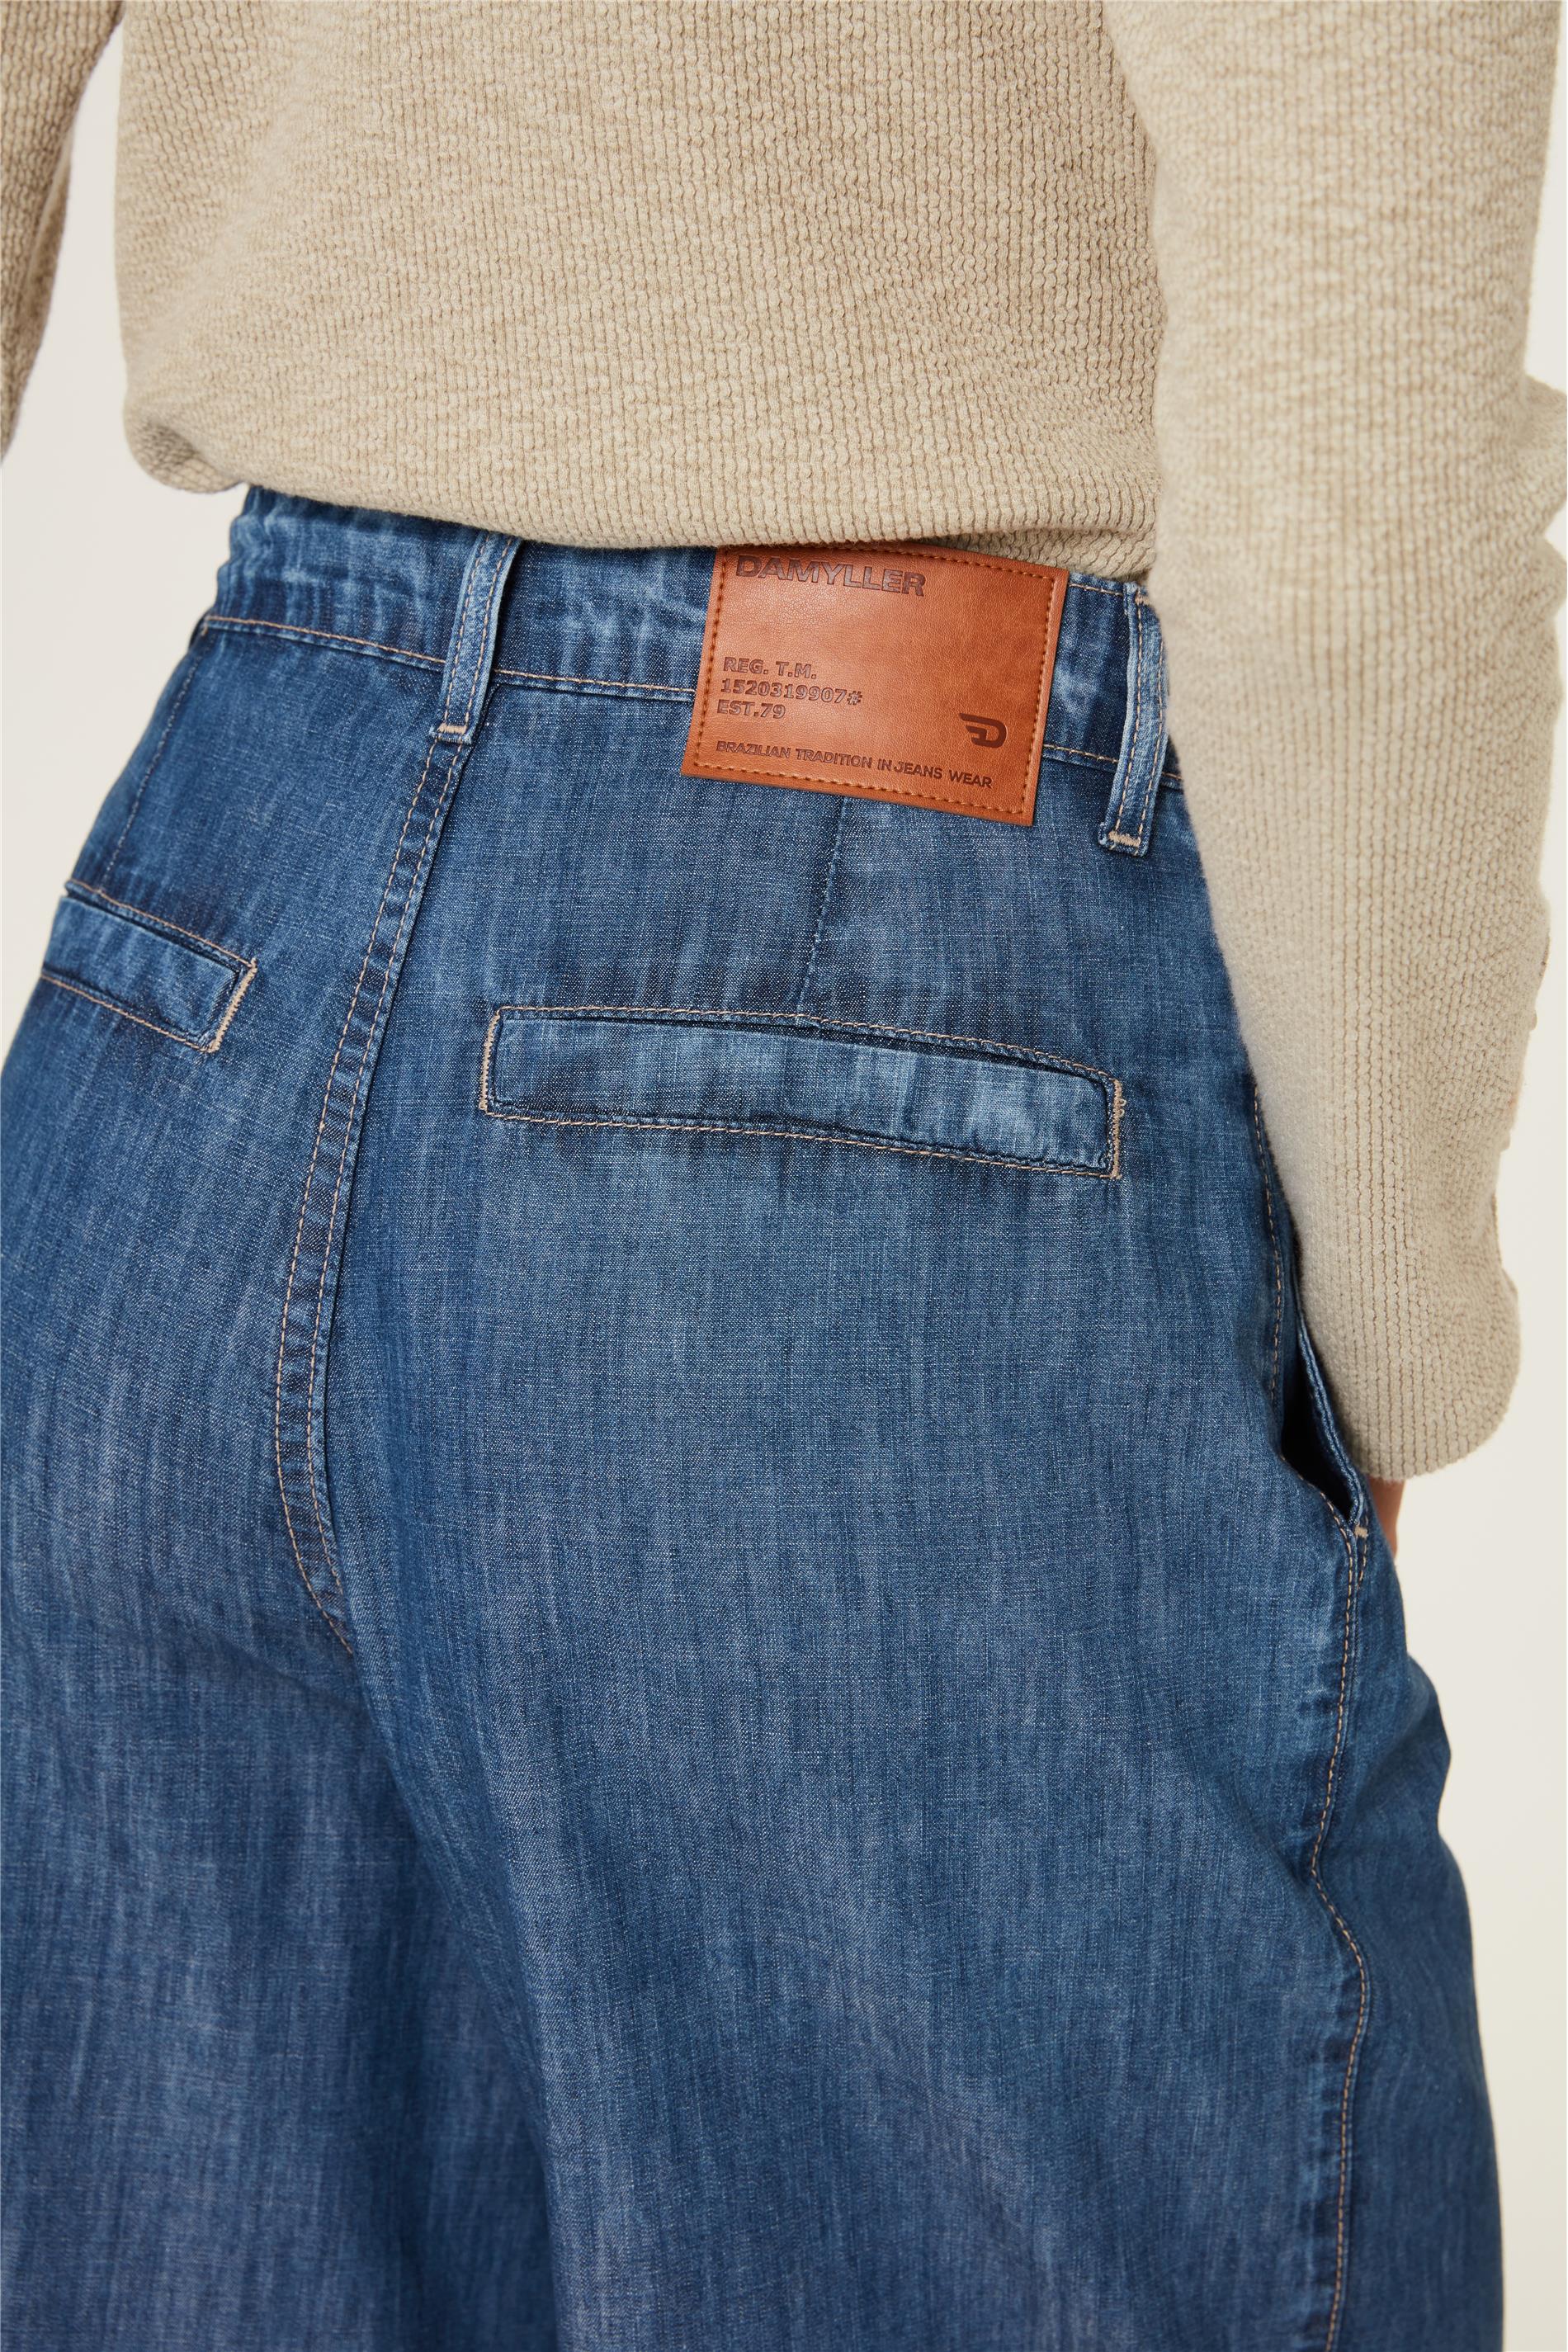 Calça Jeans Jegging Comfy G5 C1 - Damyller - O Jeans da Vida Real